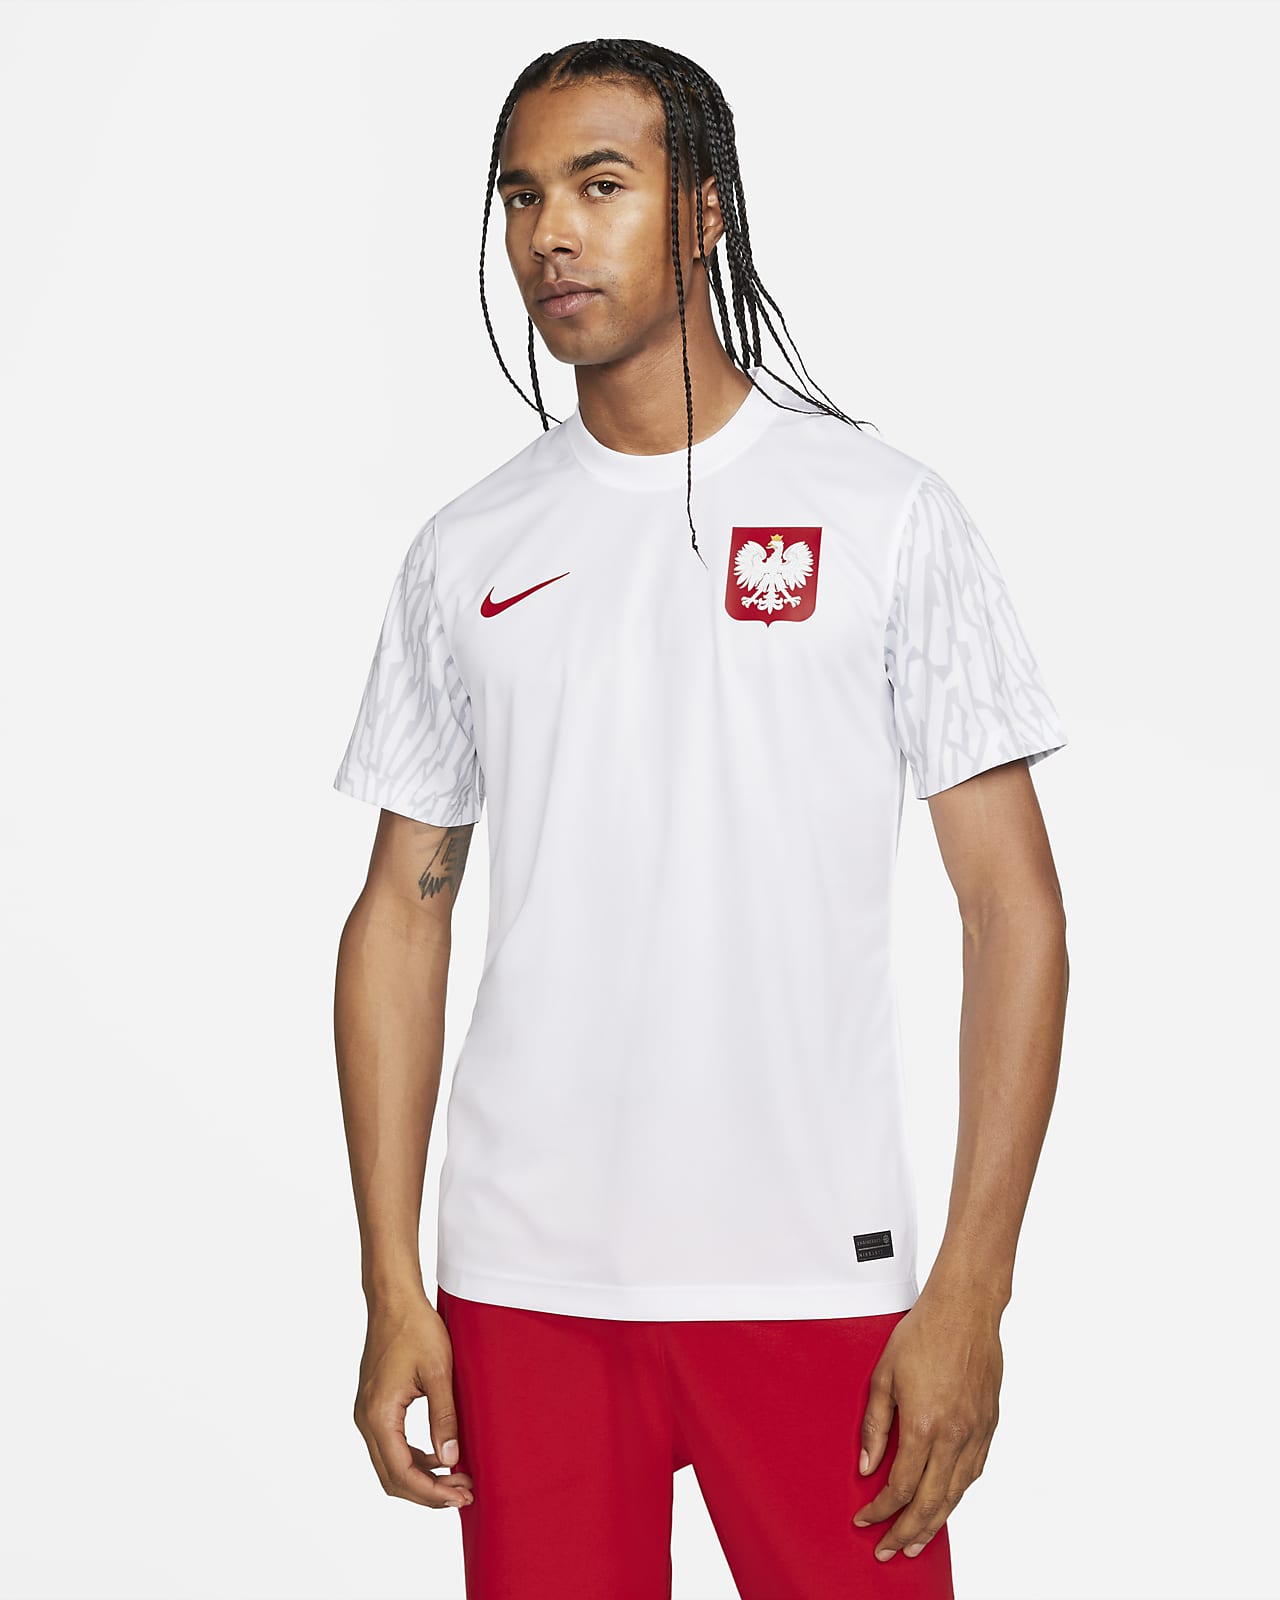 Найк Польша. Nike poland